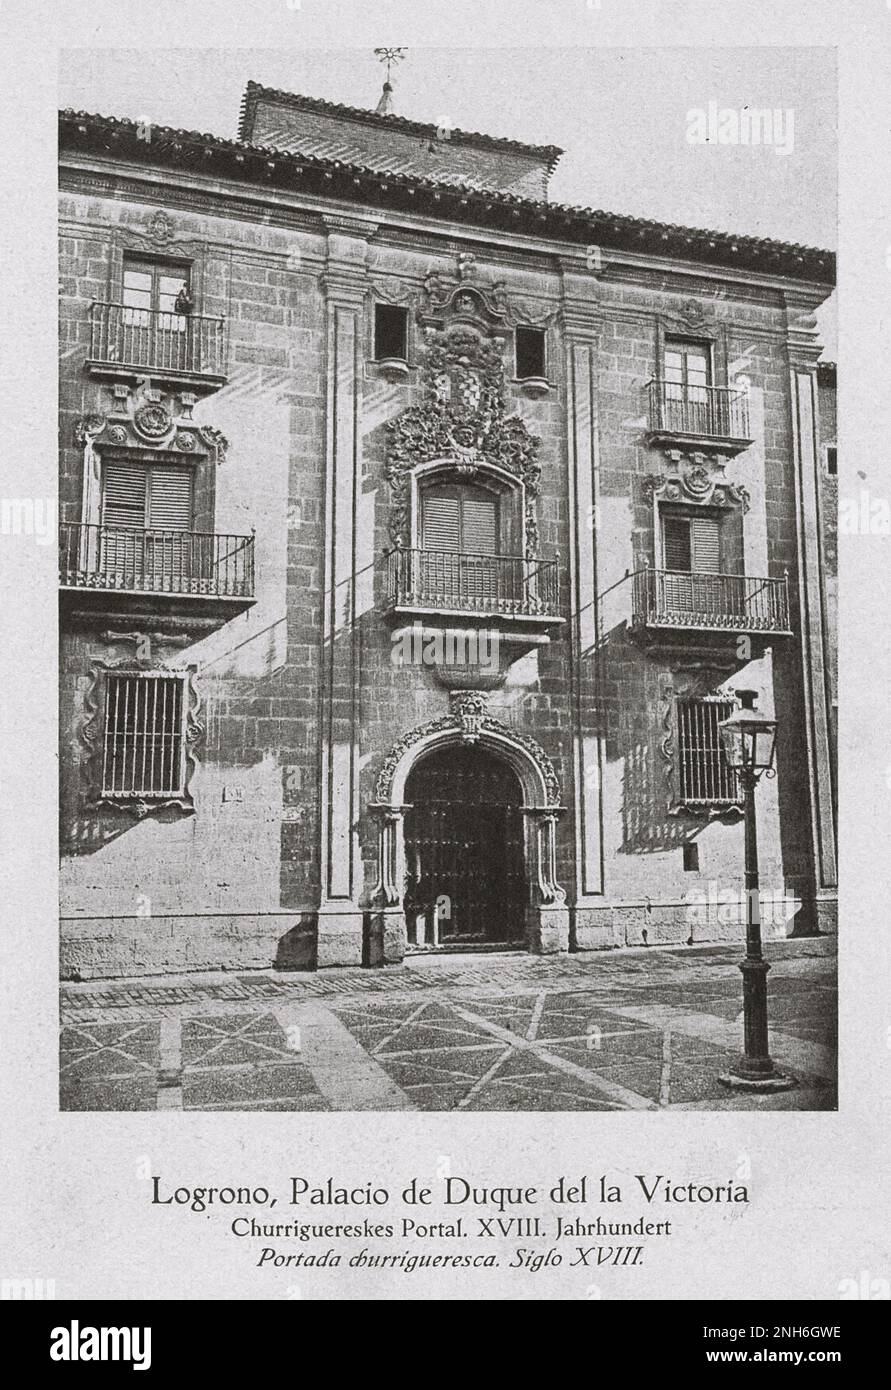 Architektur des alten Spaniens. Vintage-Foto des Palacio de Duque del la Victoria, Logrono. Portal La Rioja Churrigueresque. 19. Jahrhundert Stockfoto